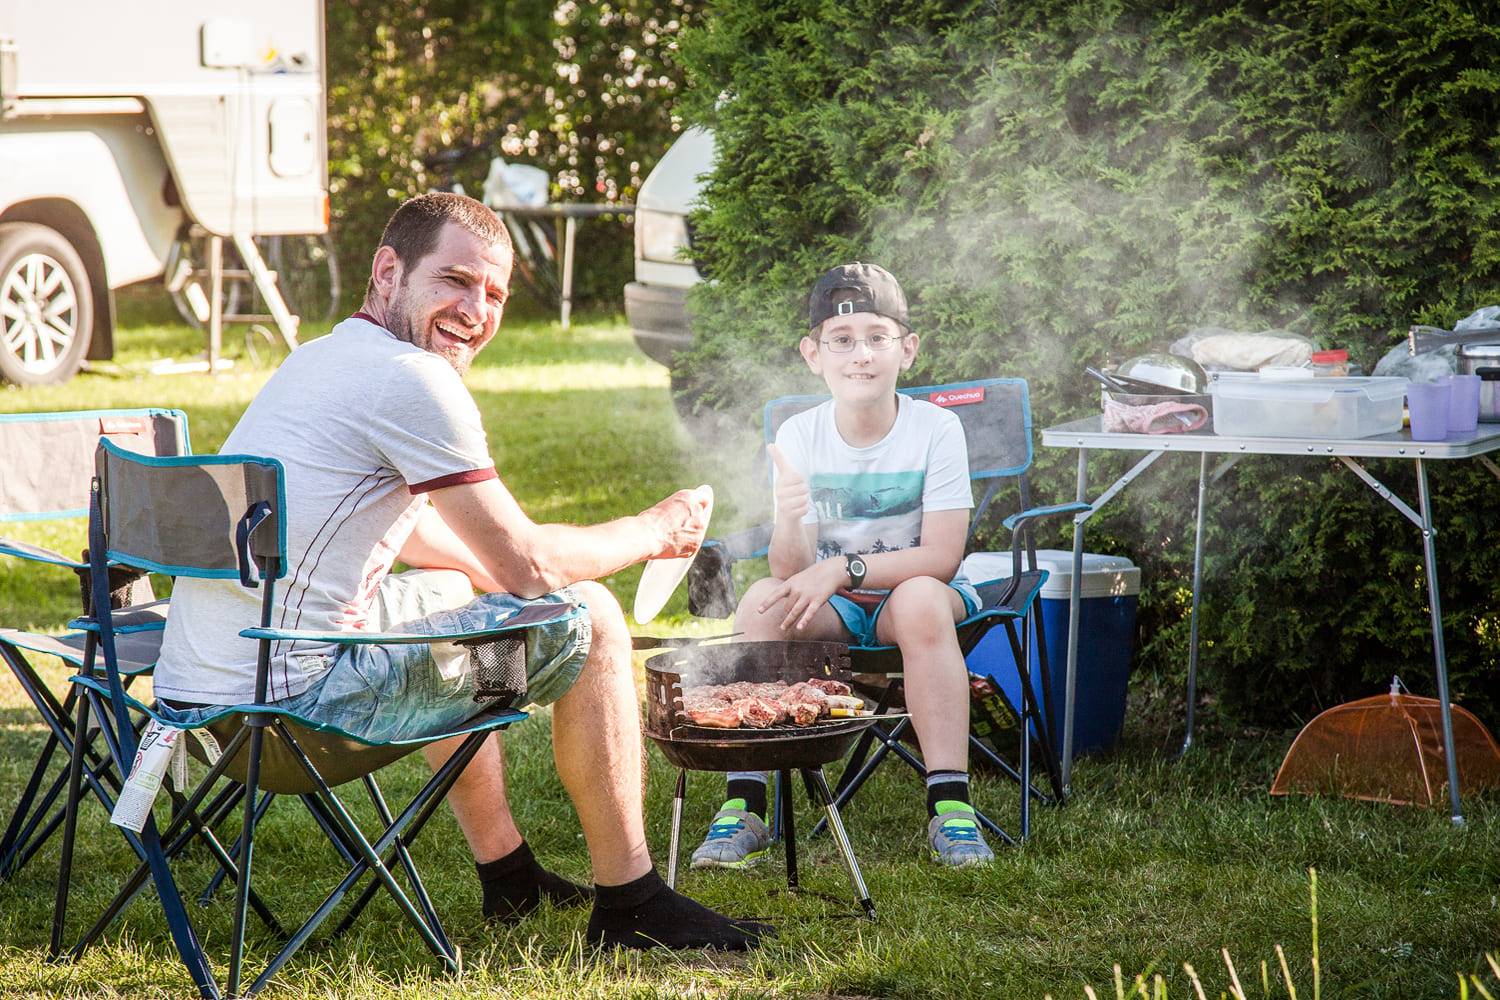 Umweltschonend grillen macht den echten Grillmeister - auch beim Camping